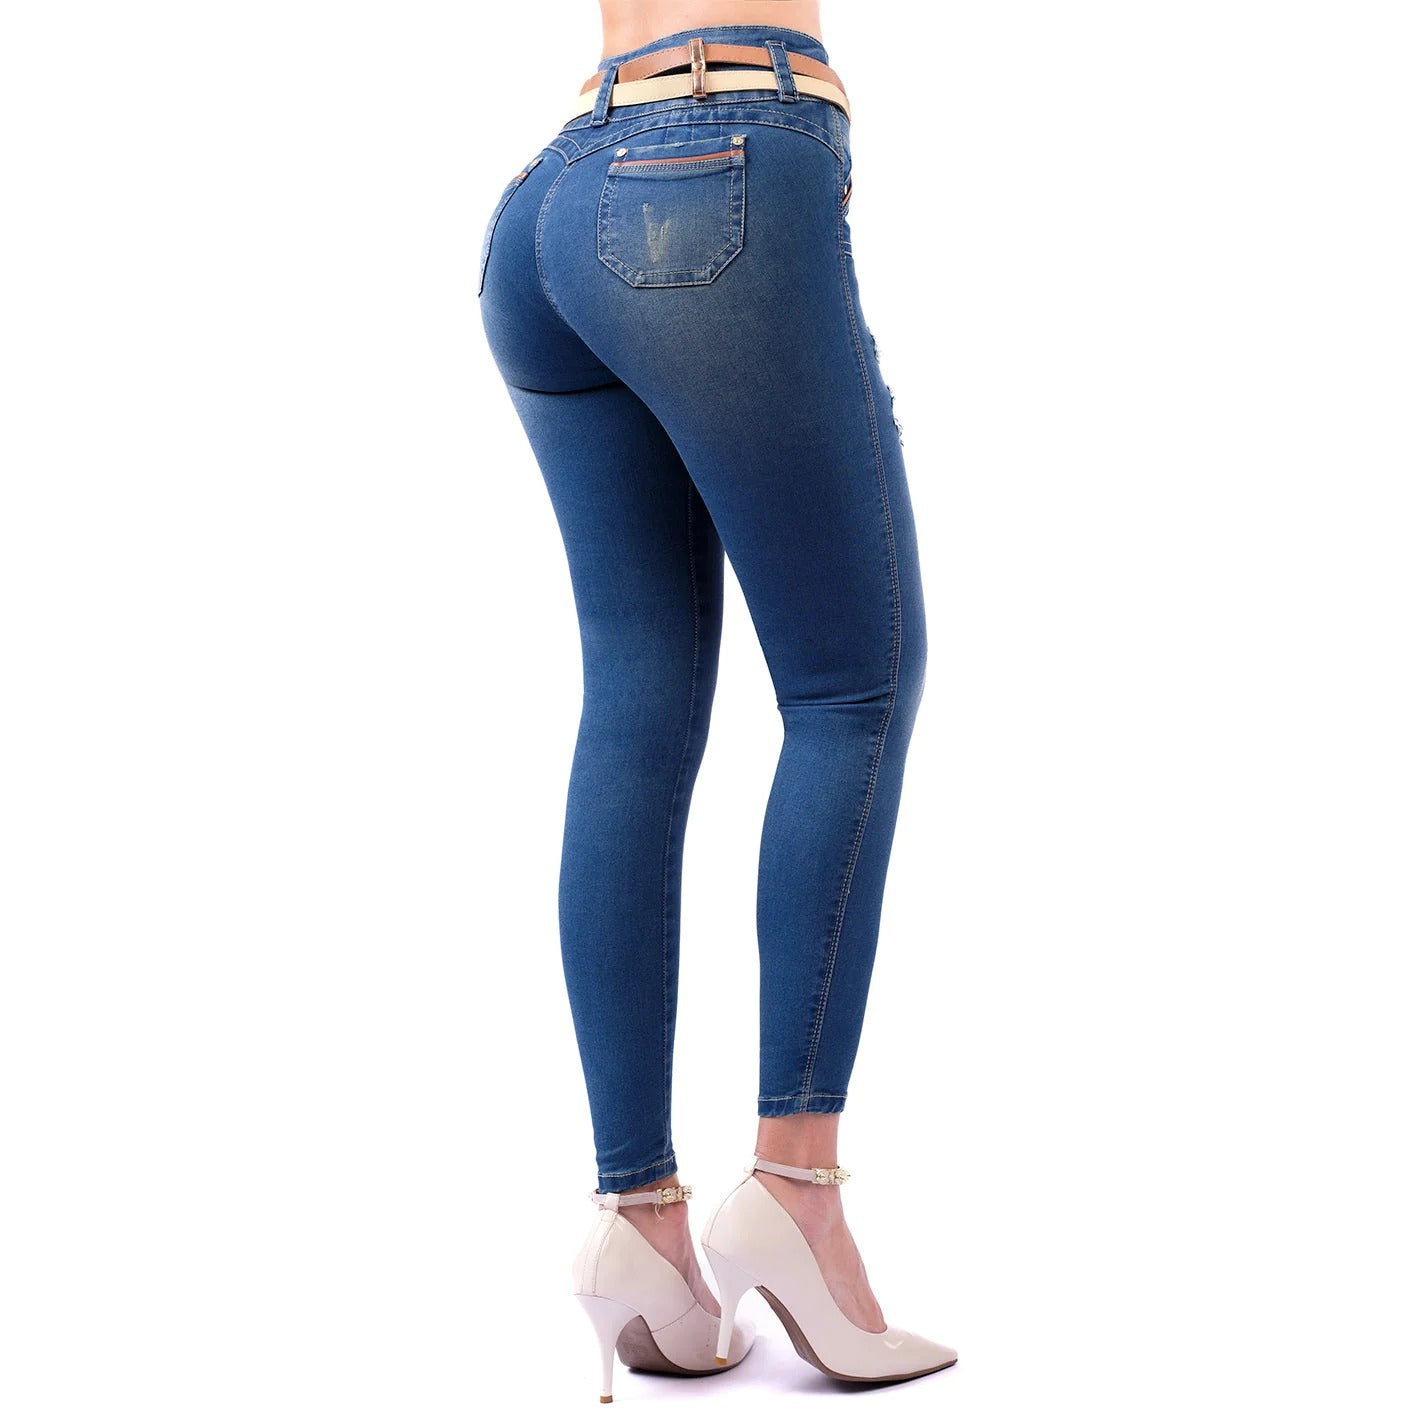 Colombian Butt Lifter Jeans